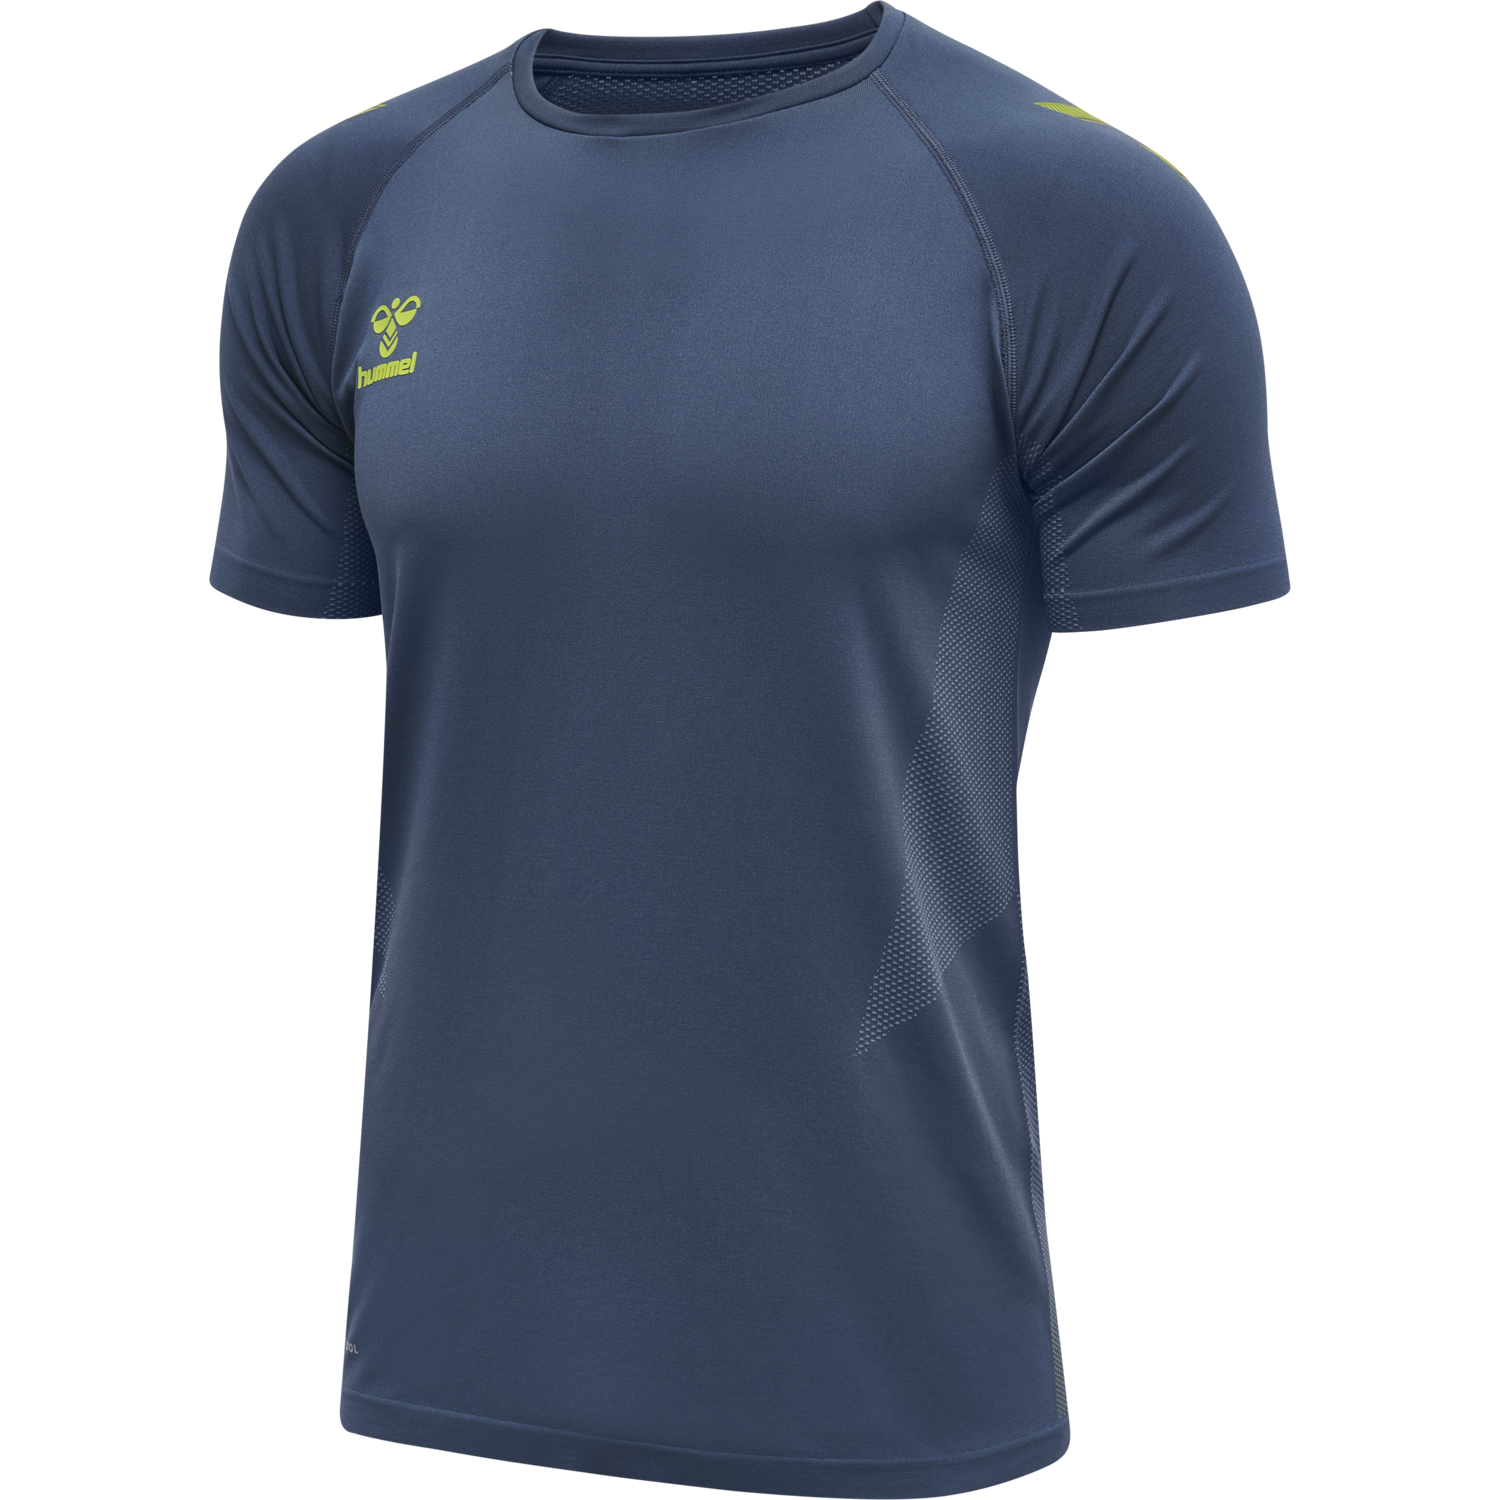 Details about   Hummel Performance Mens Sports Training Running Long Sleeve Jersey Shirt Top 